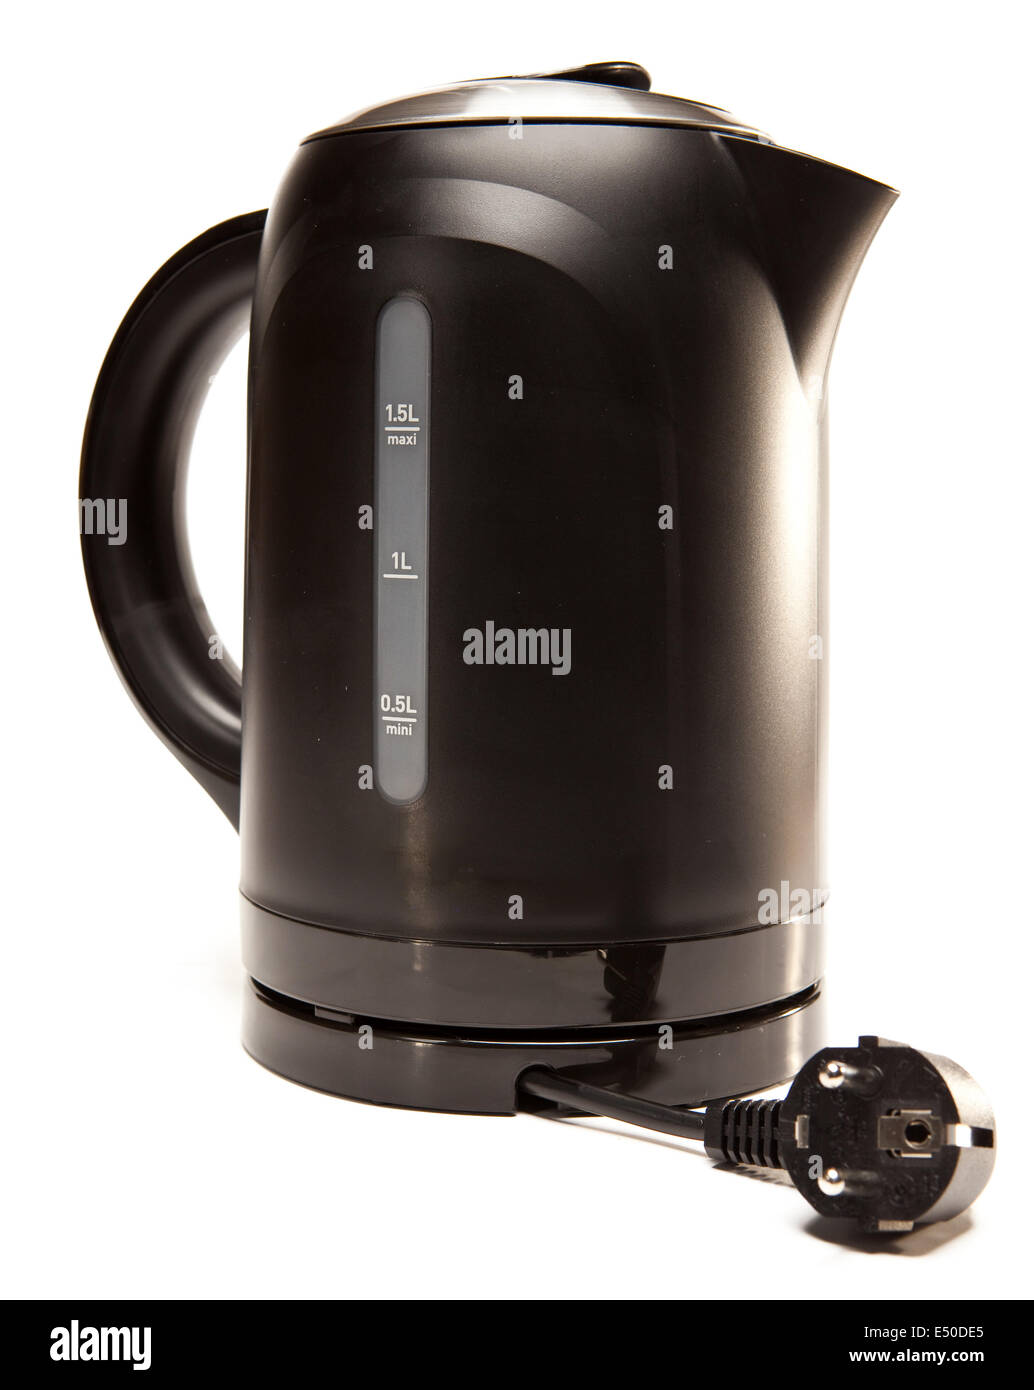 https://c8.alamy.com/comp/E50DE5/electric-tea-kettle-on-a-white-background-E50DE5.jpg